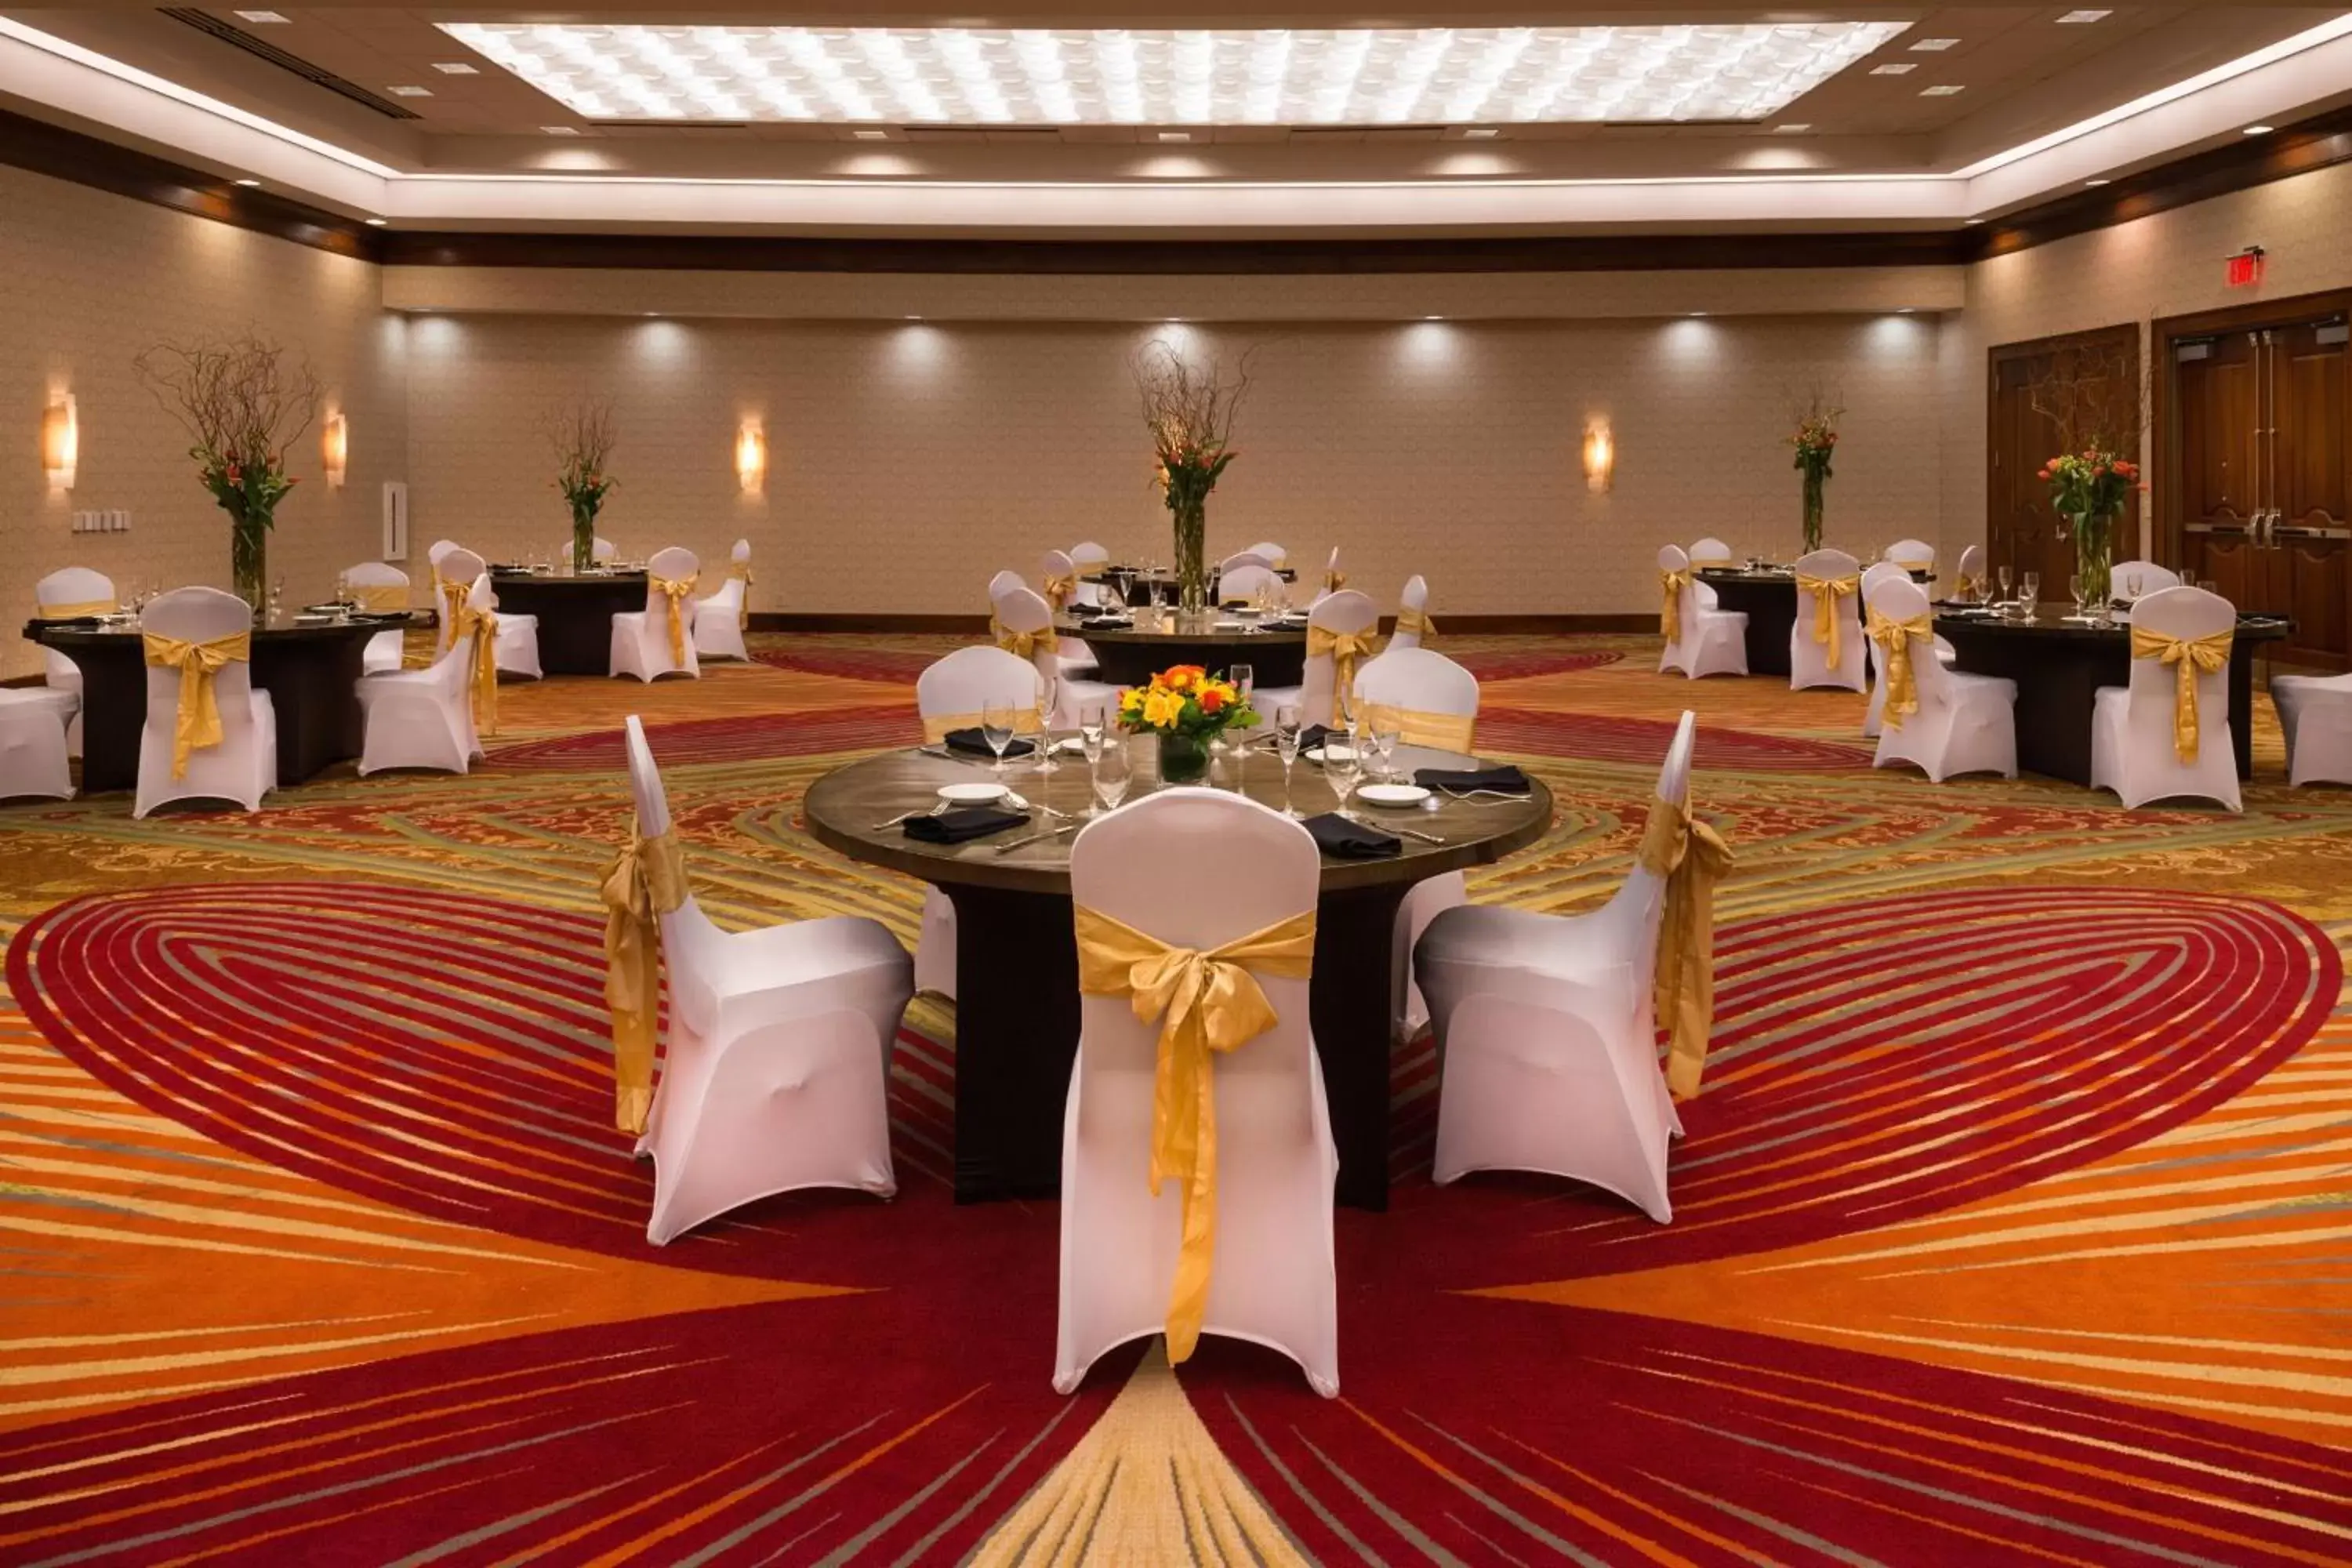 Meeting/conference room, Banquet Facilities in Marriott Memphis East